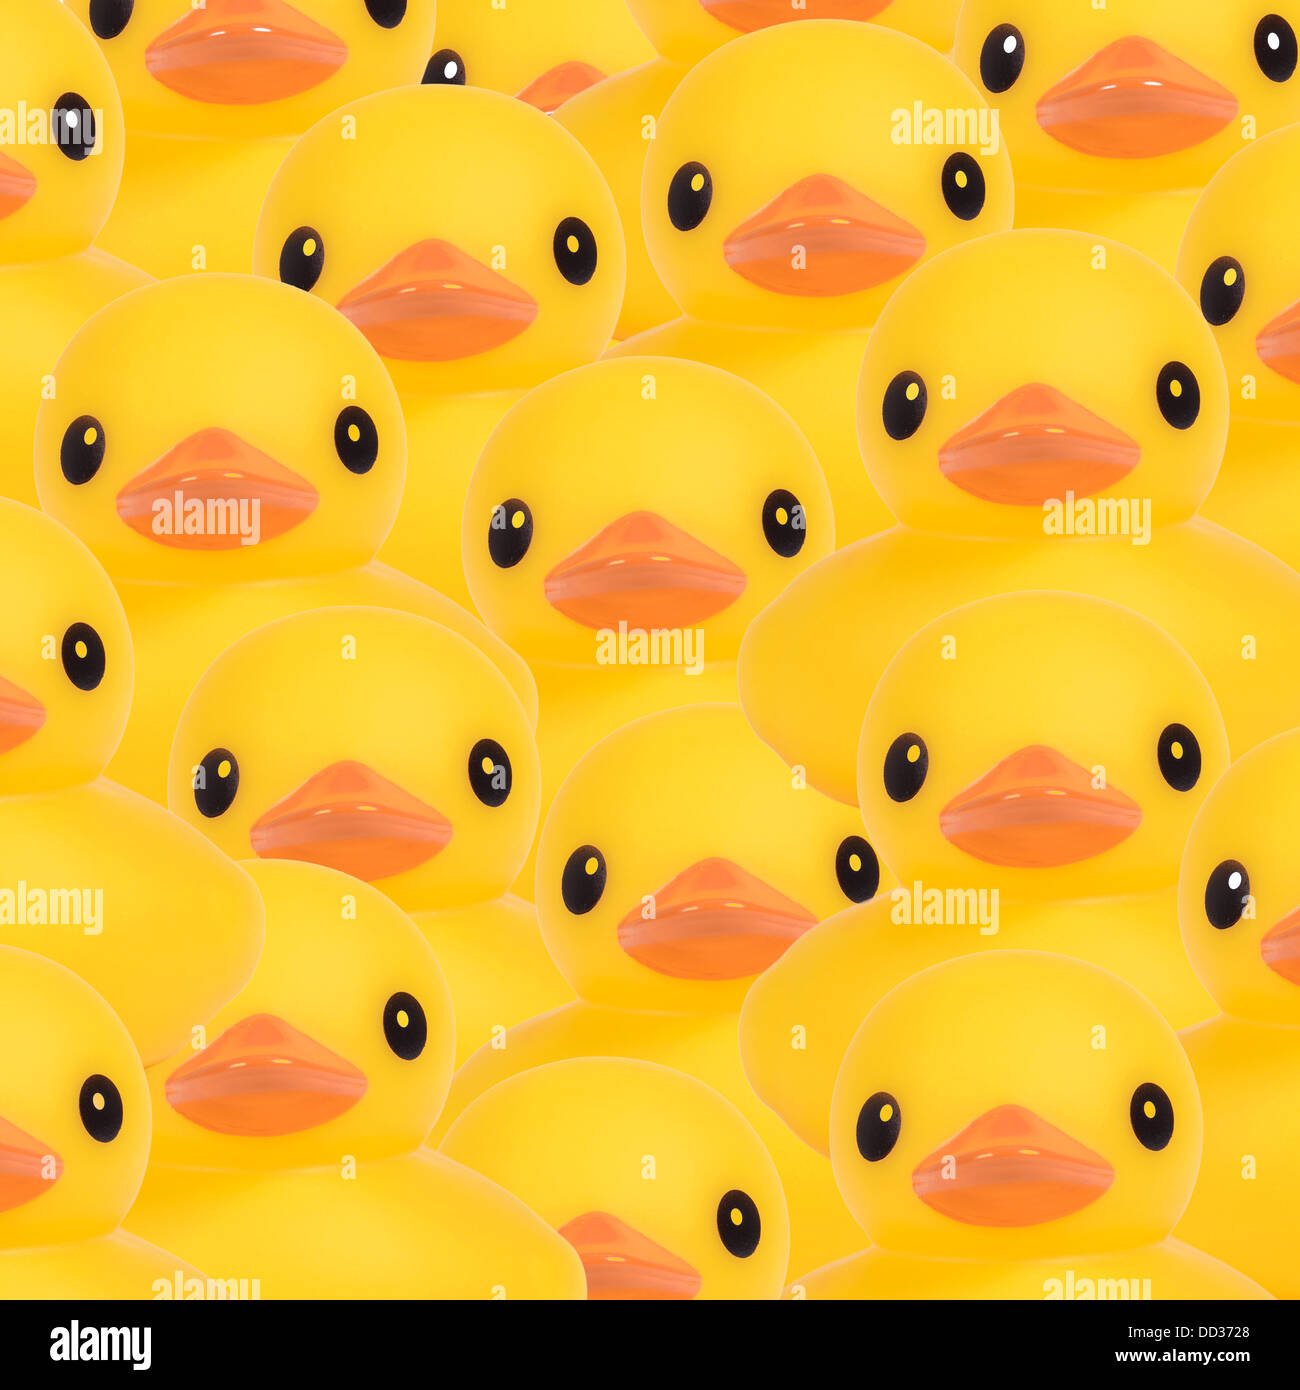 Yellow rubber ducks montage Stock Photo